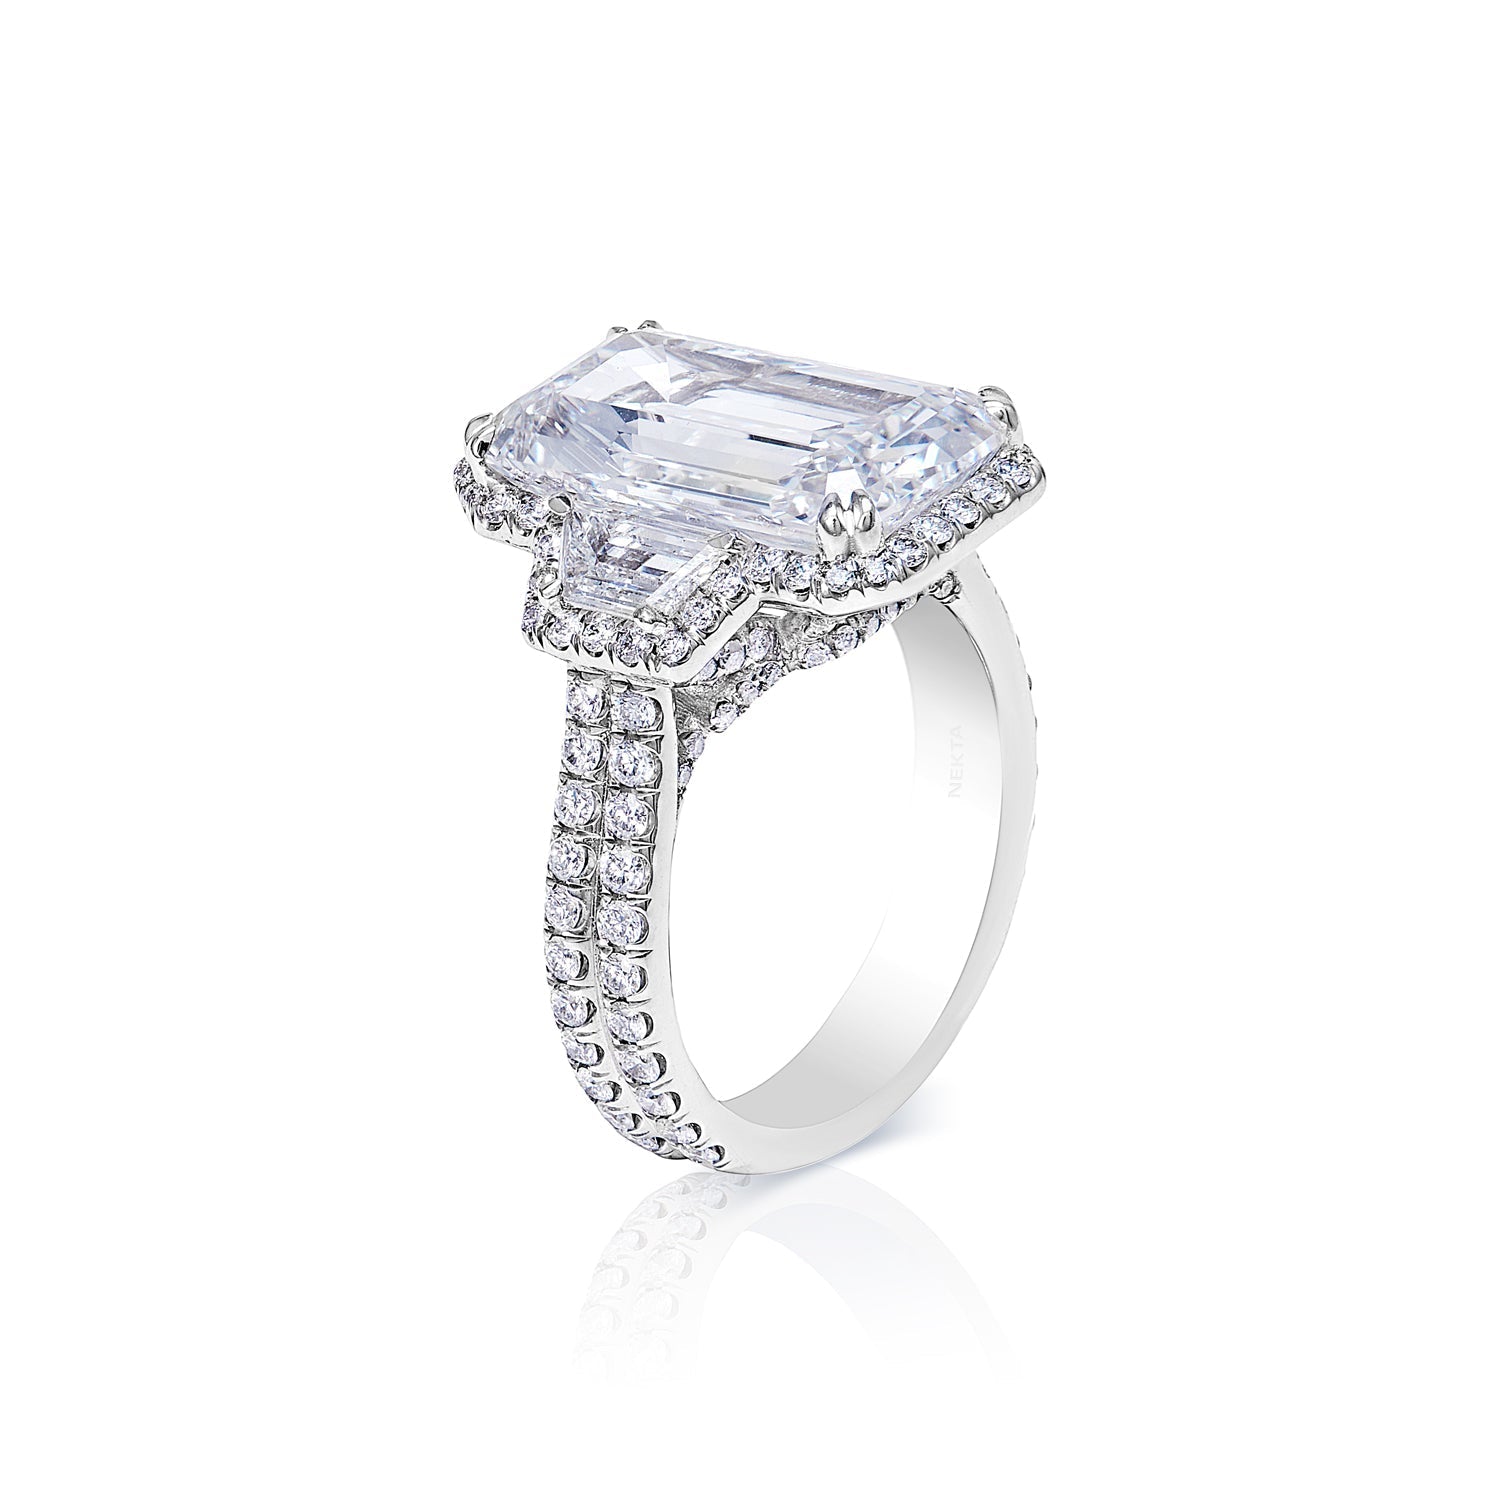 Norah 9 Carat Emerald Cut E VVS1 Diamond Engagement Ring in Platinum. GIA Side View